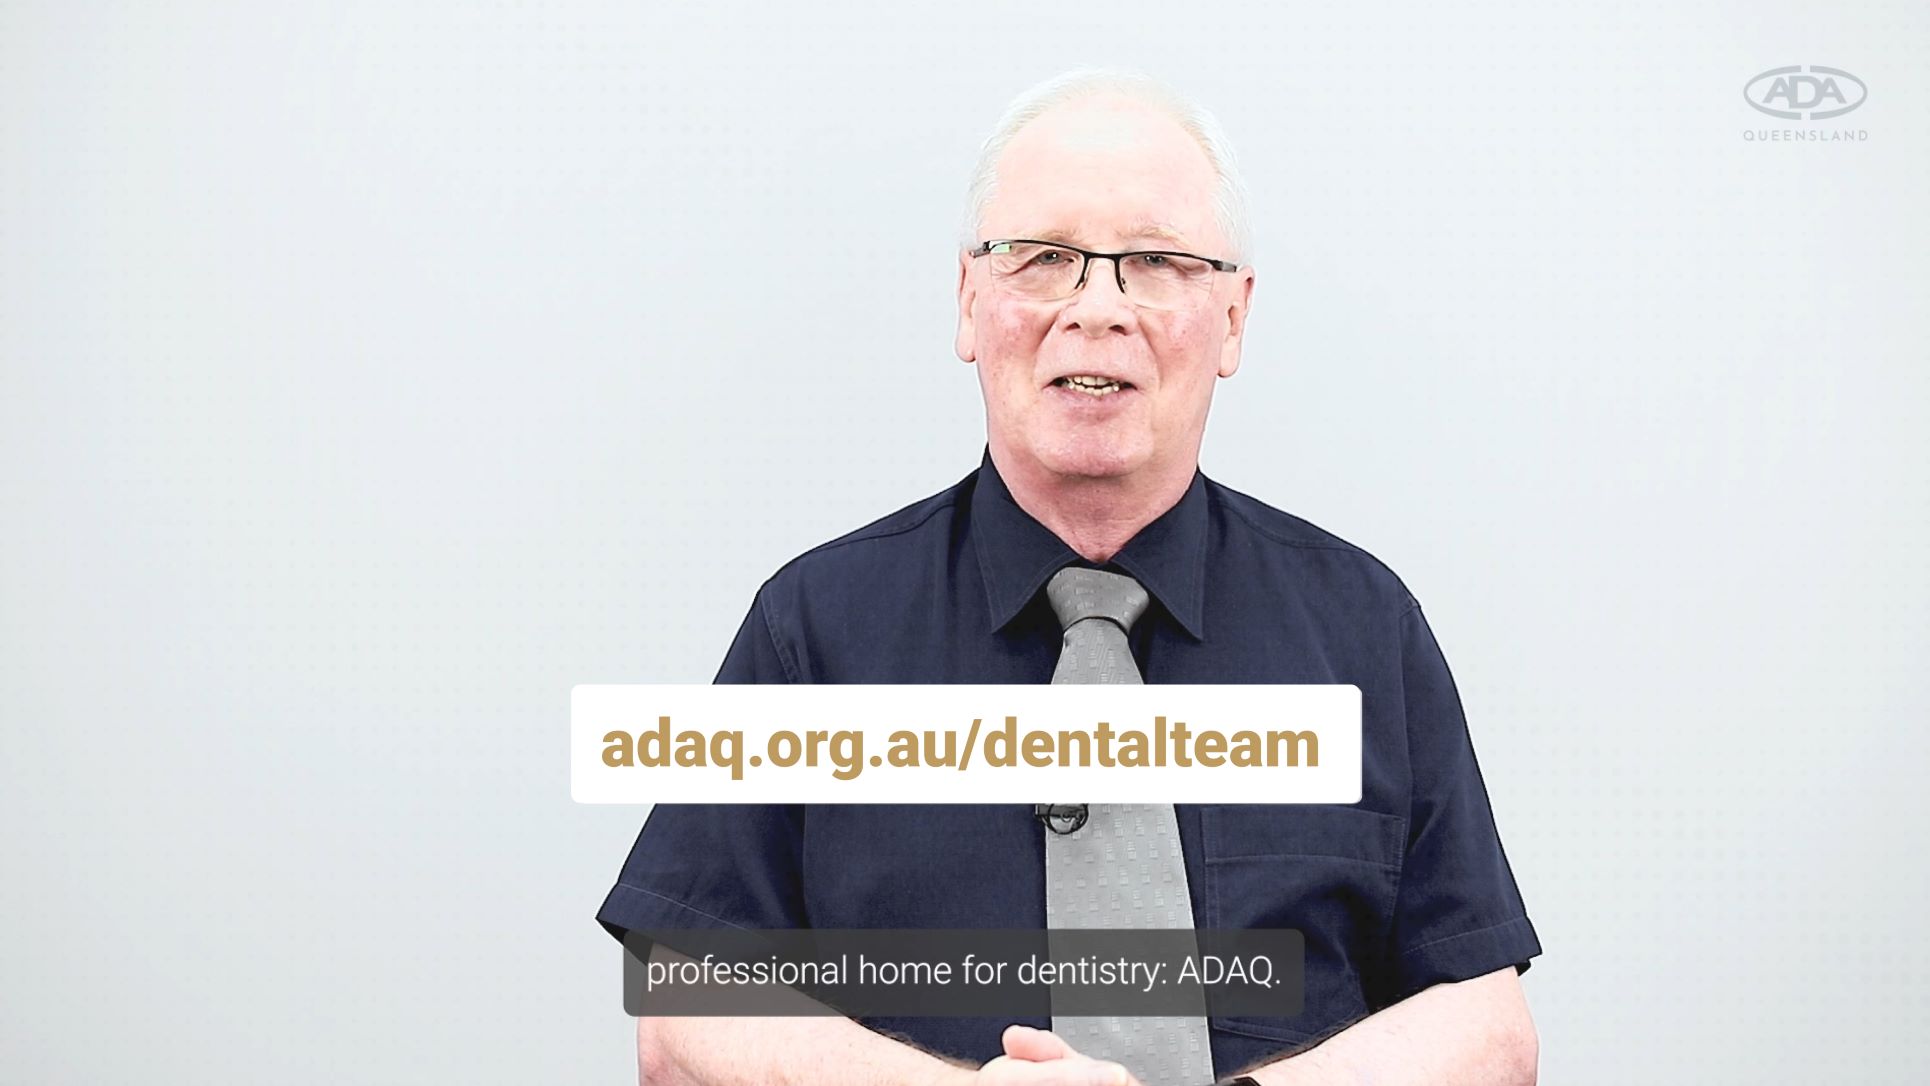 Introducing Dental Team Access